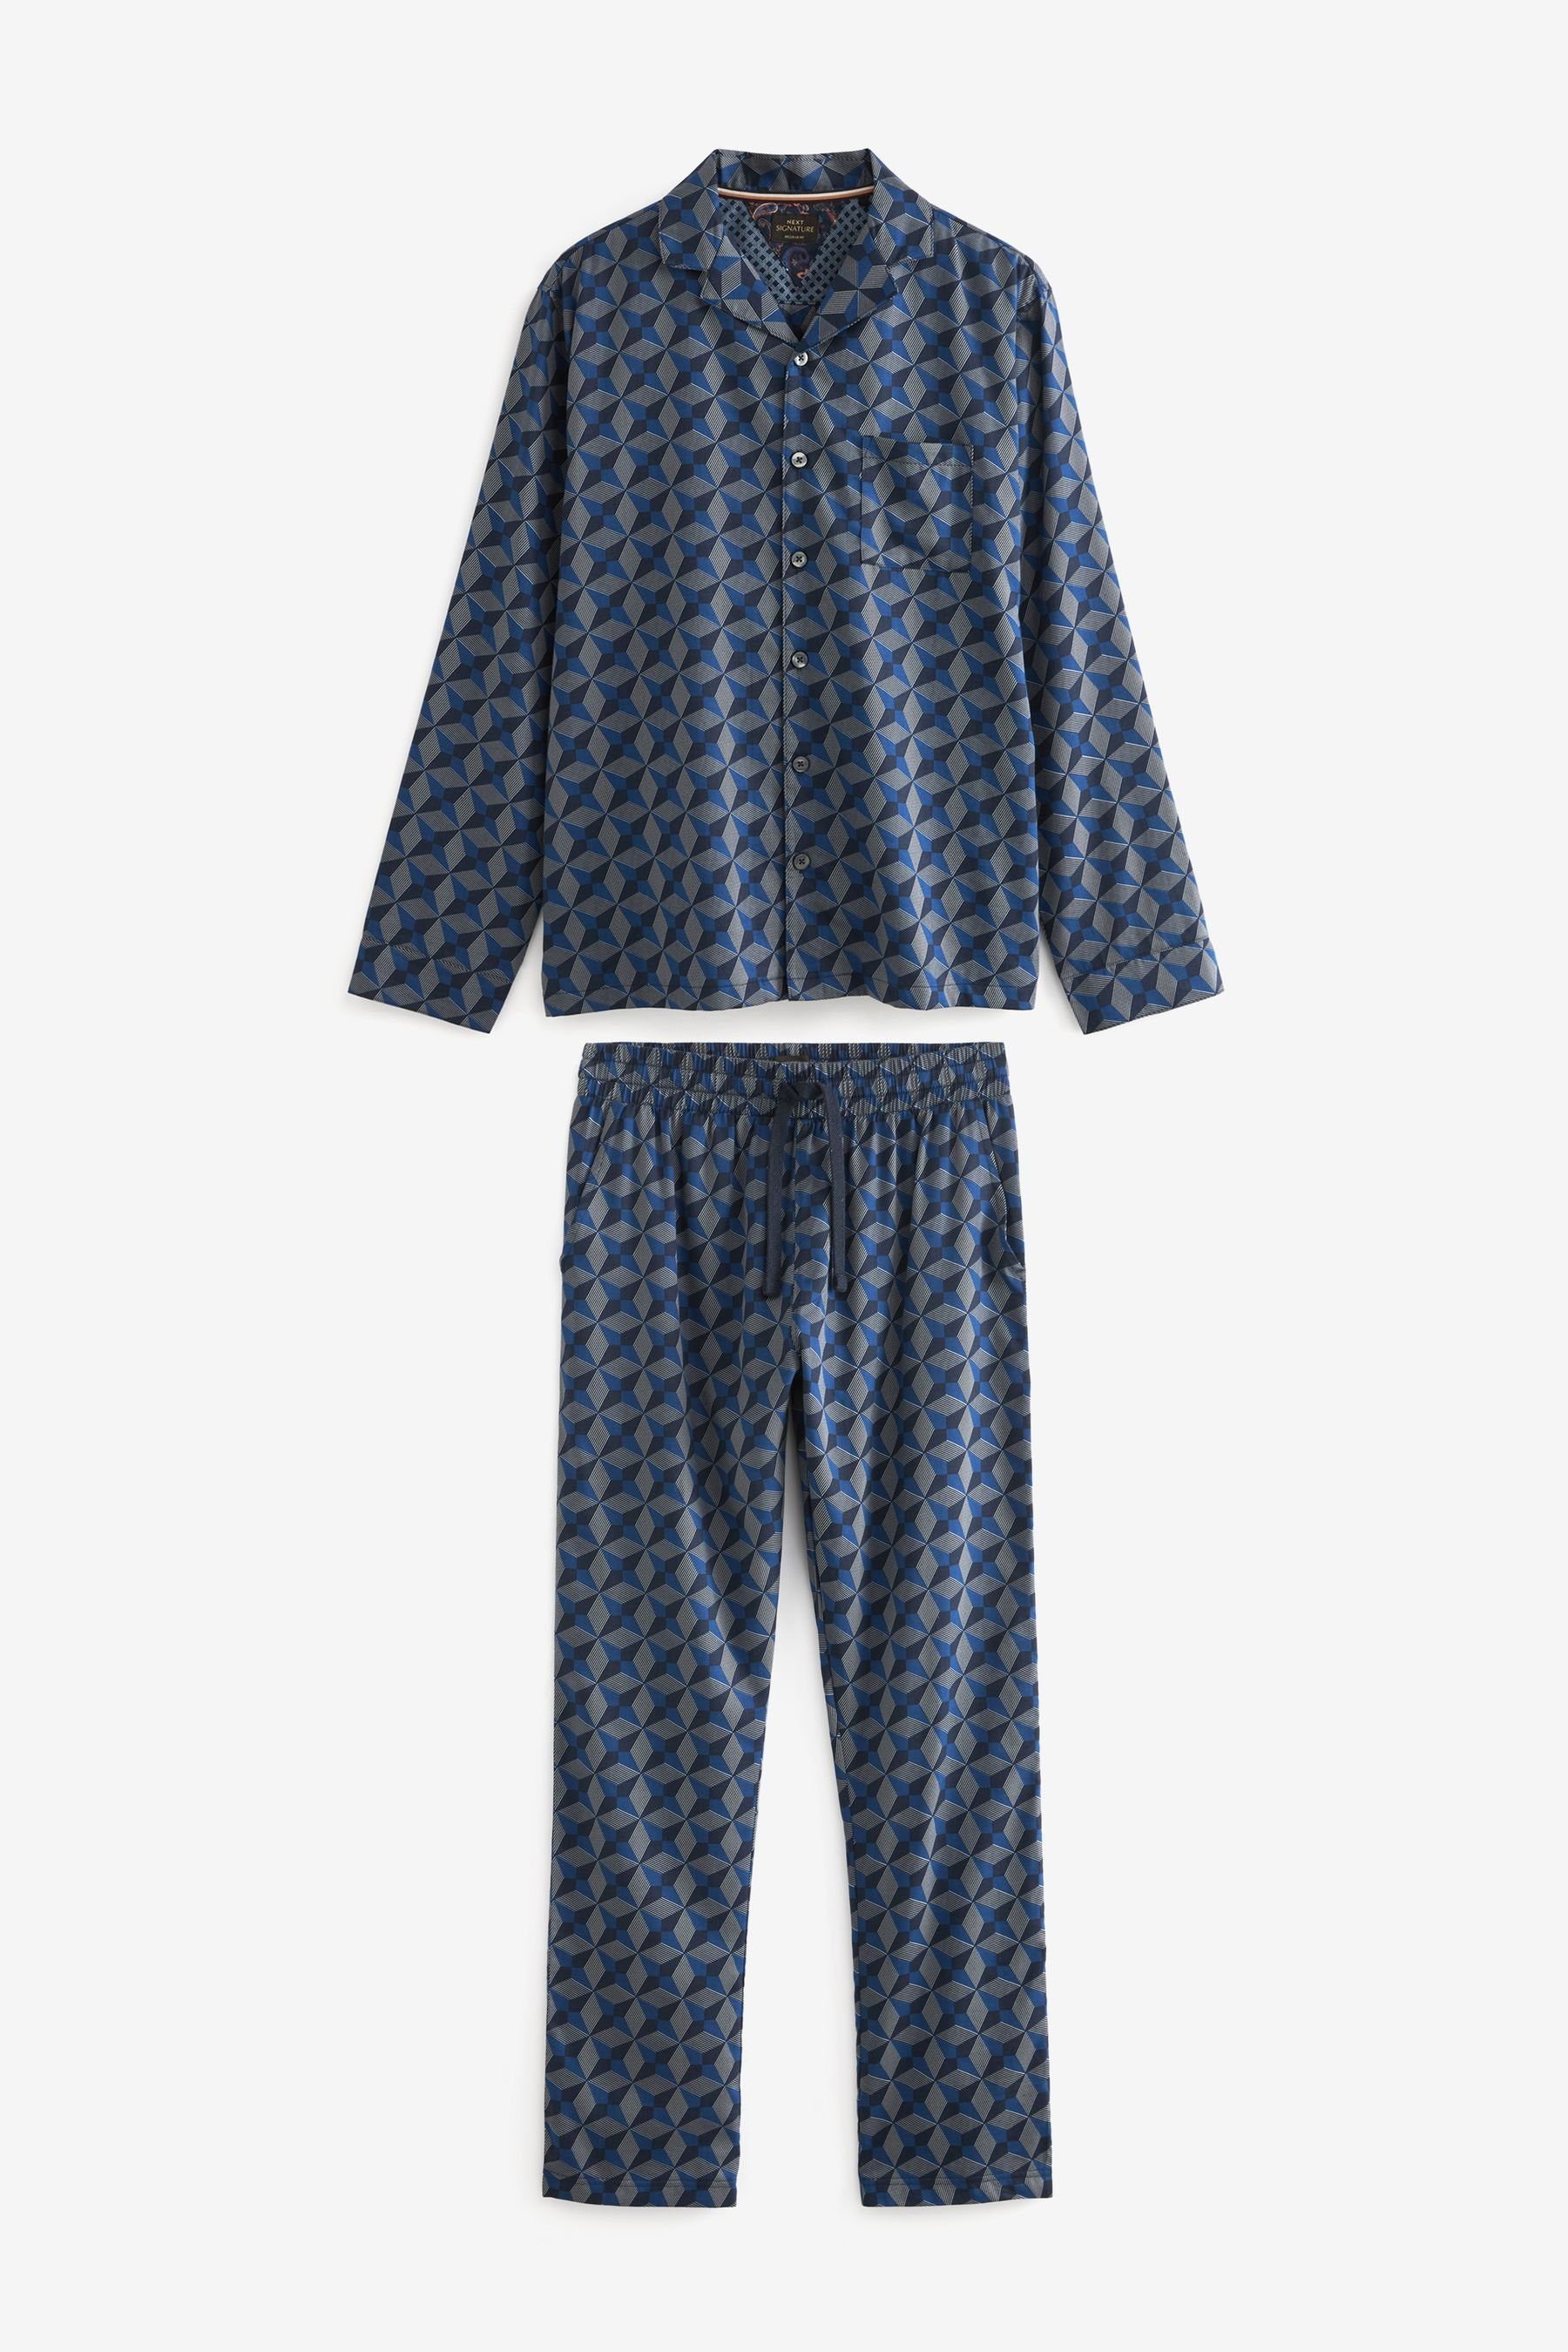 (2 Next Traditioneller Signature Schlafanzug Print Pyjama mit tlg)